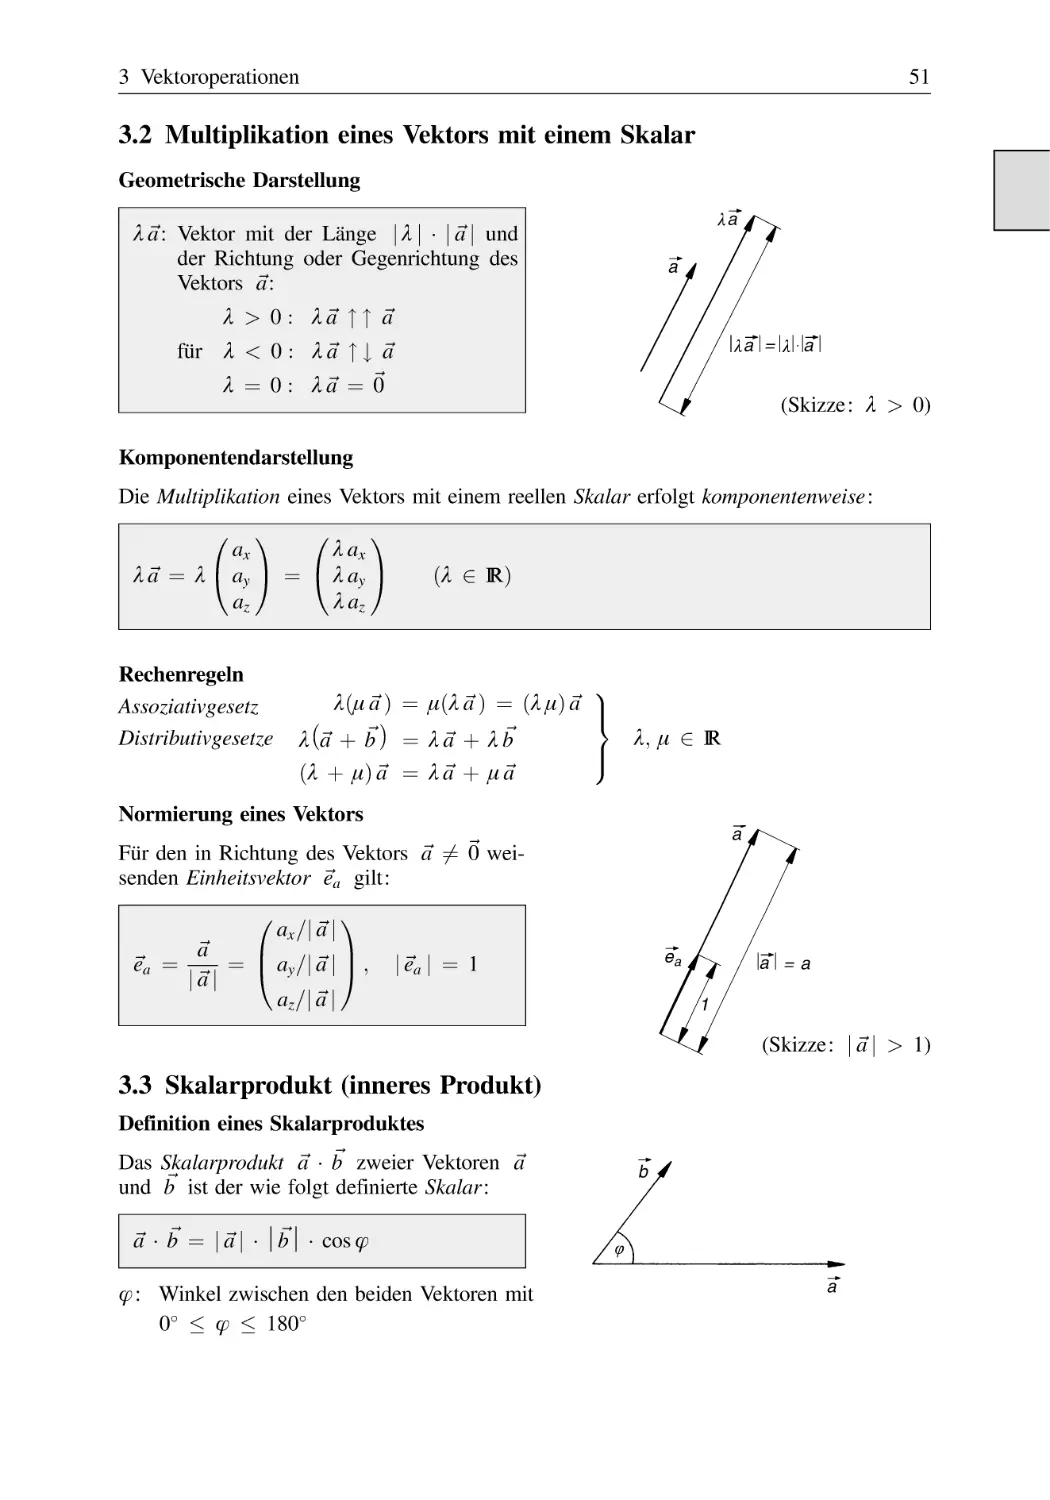 3.2 Multiplikation eines Vektors mit einem Skalar
3.3 Skalarprodukt (inneres Produkt)